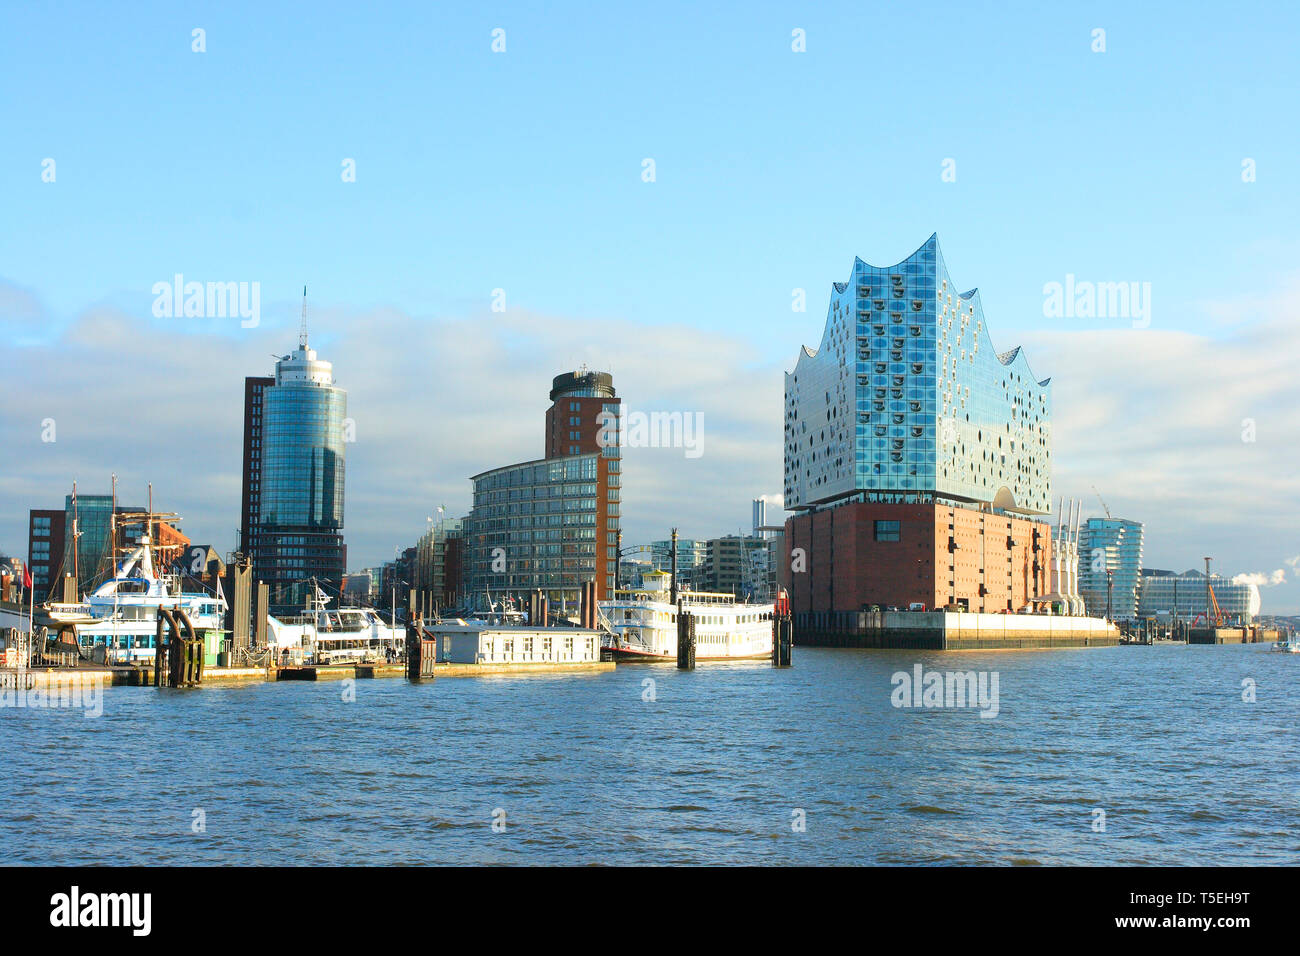 Elbphilharmonie Laeiszhalle in the Hamburg Harbour. Germany Stock Photo